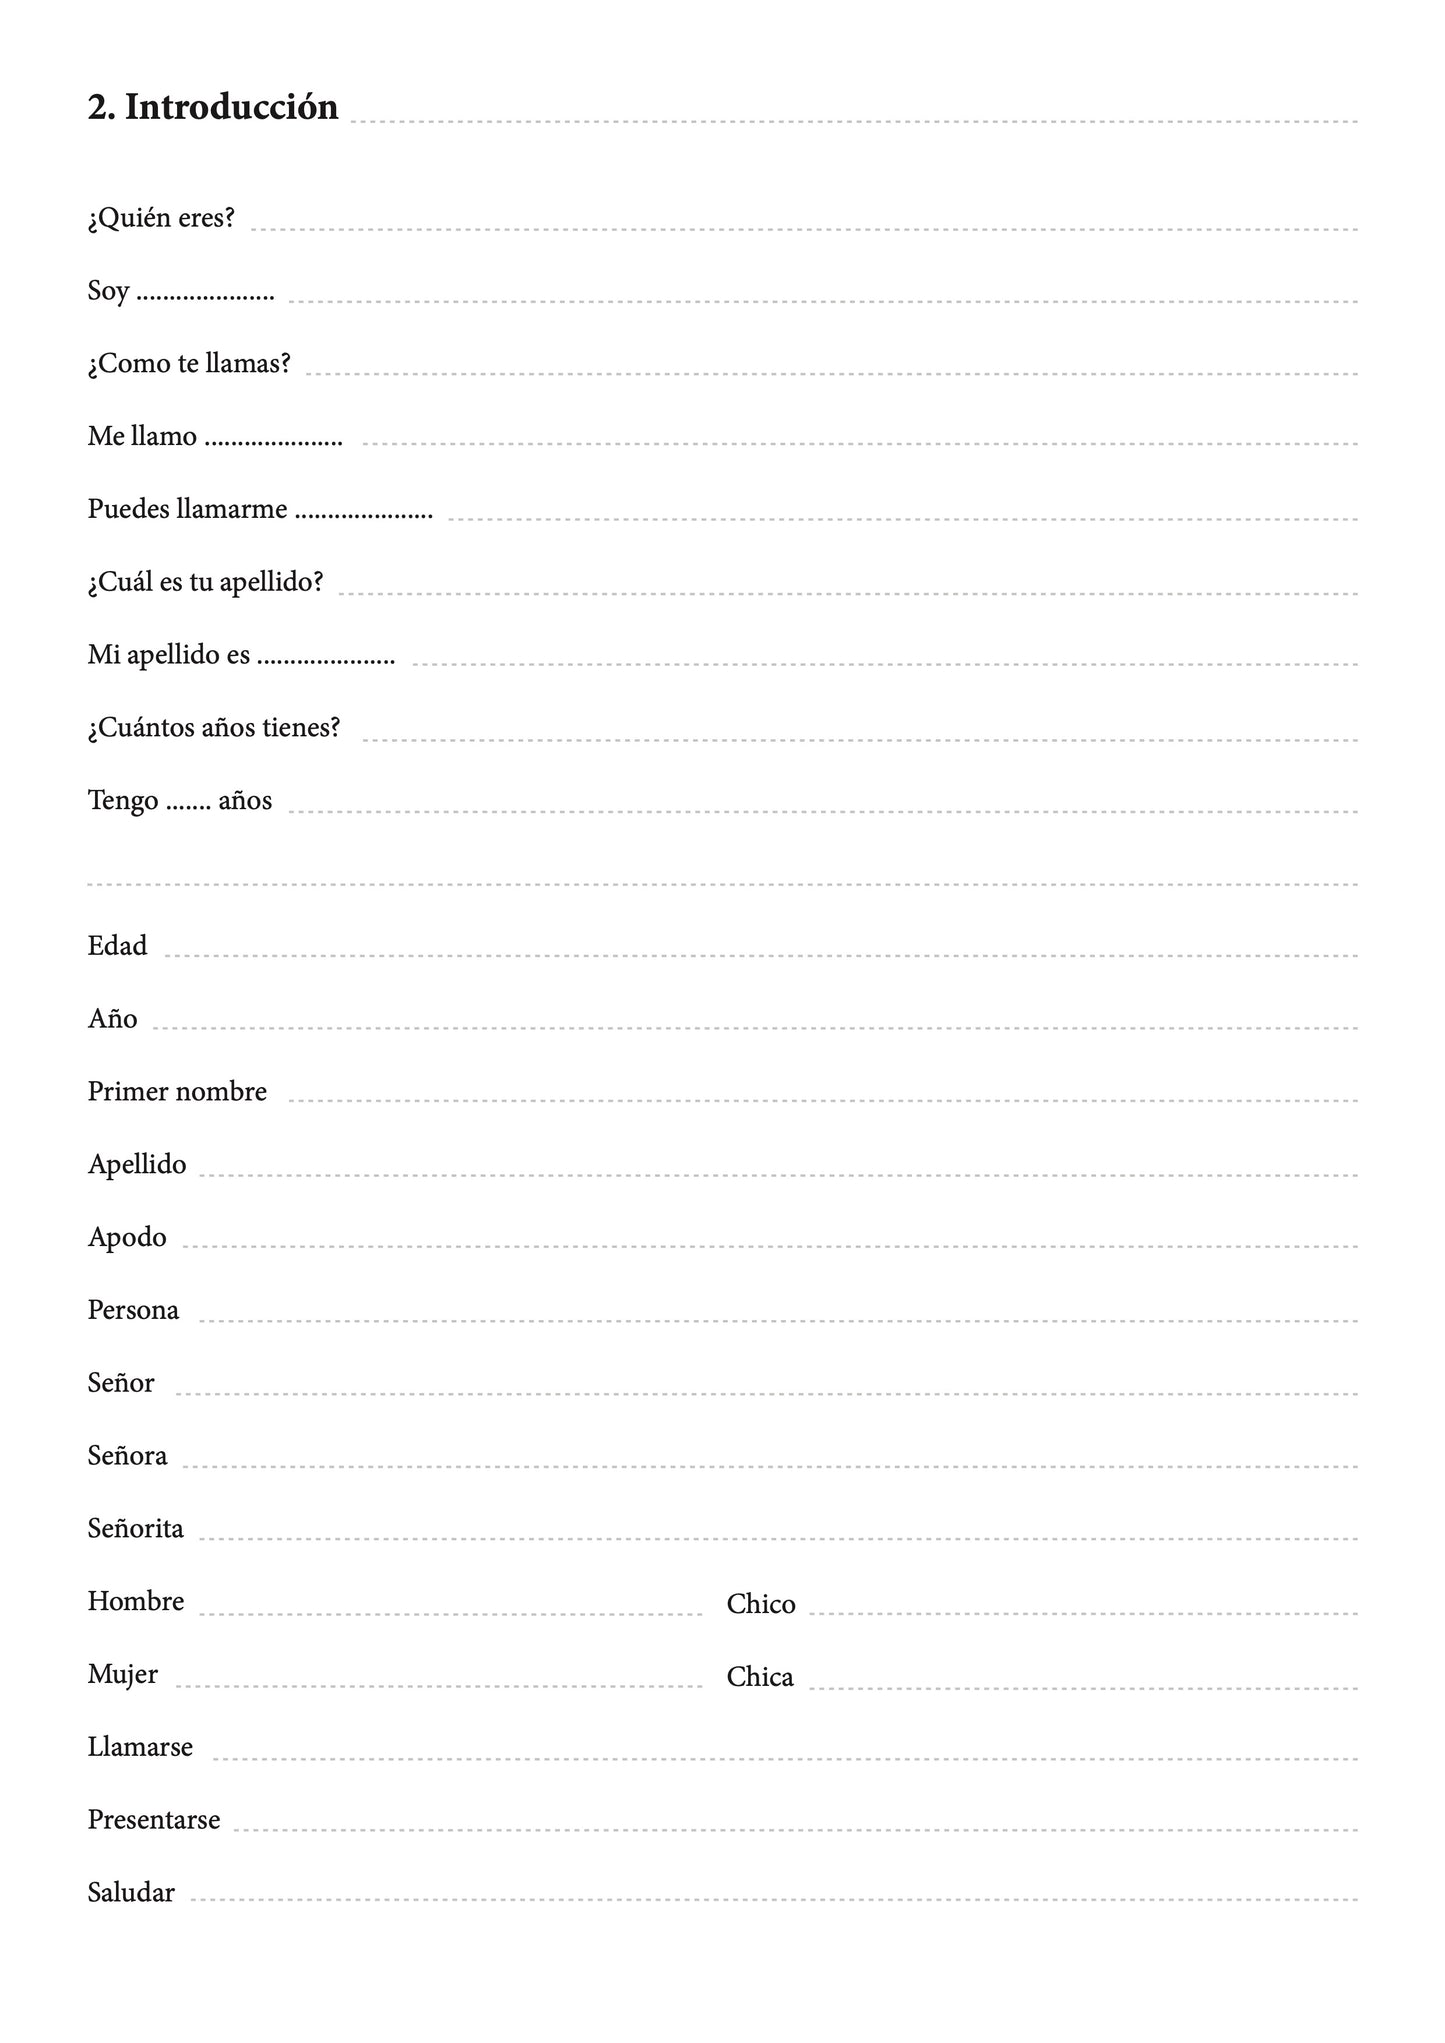 Español-bengalí cuaderno de vocabulario